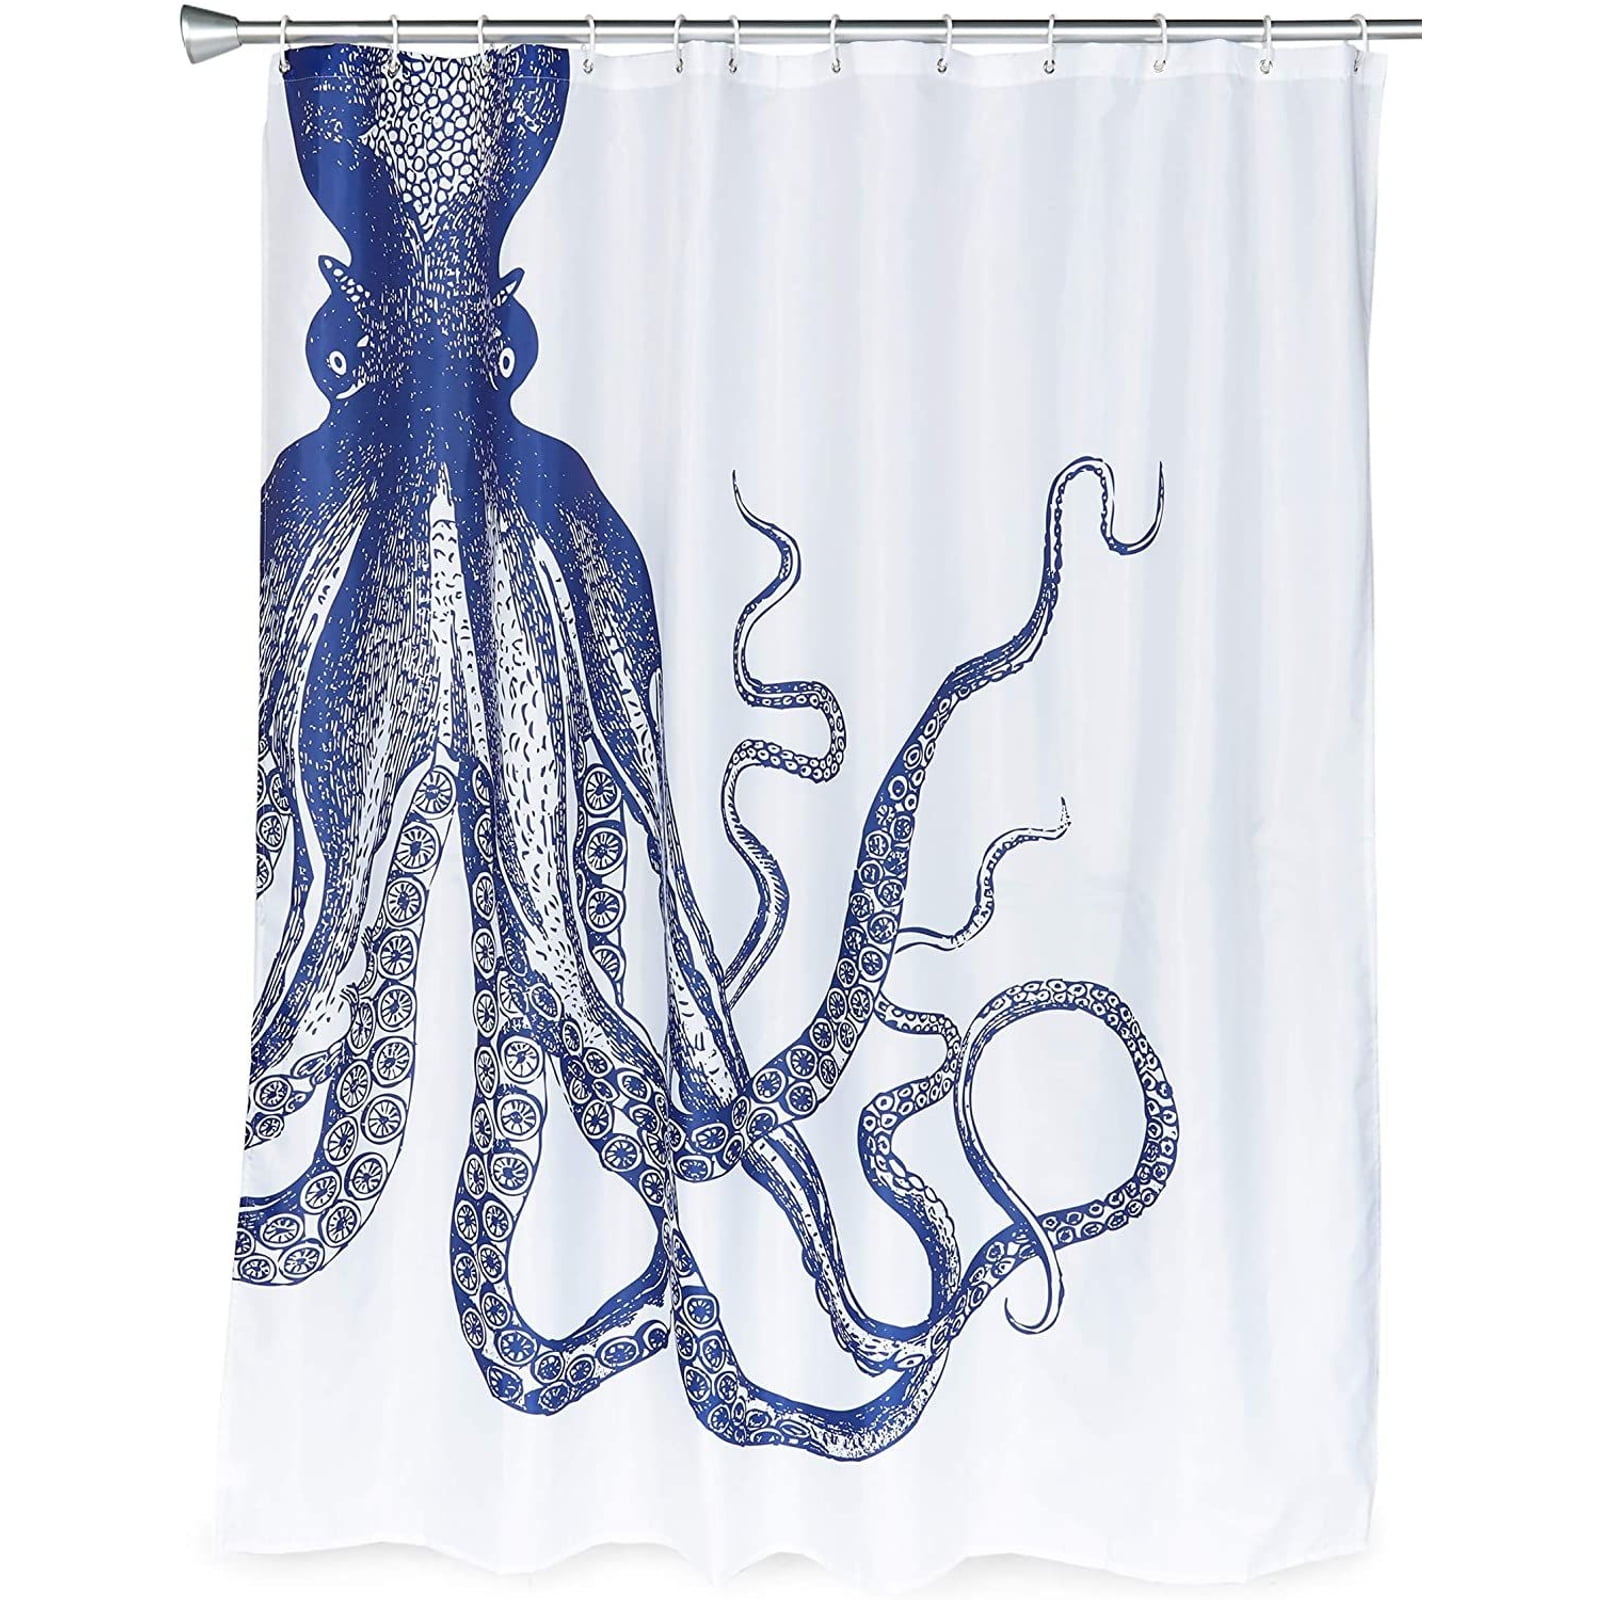 Cartoon Style Octopus Bicycle Ice Cream Fabric Shower Curtain Set Bathroom Decor 